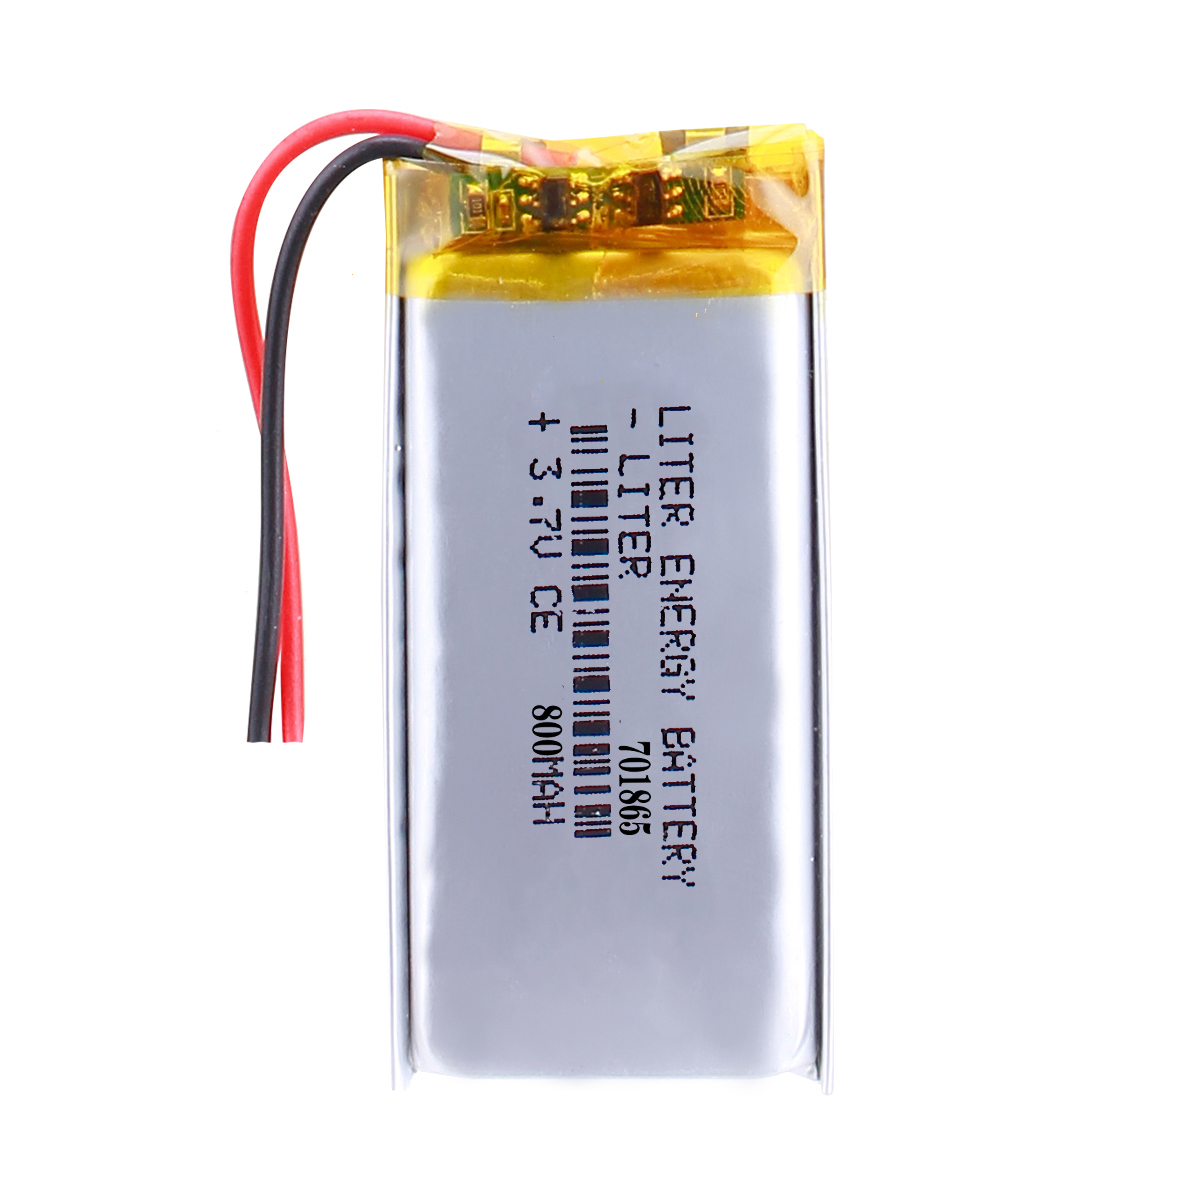 3.7V Standard Lithium Polymer Battery LP423258 800mAh 2.96Wh